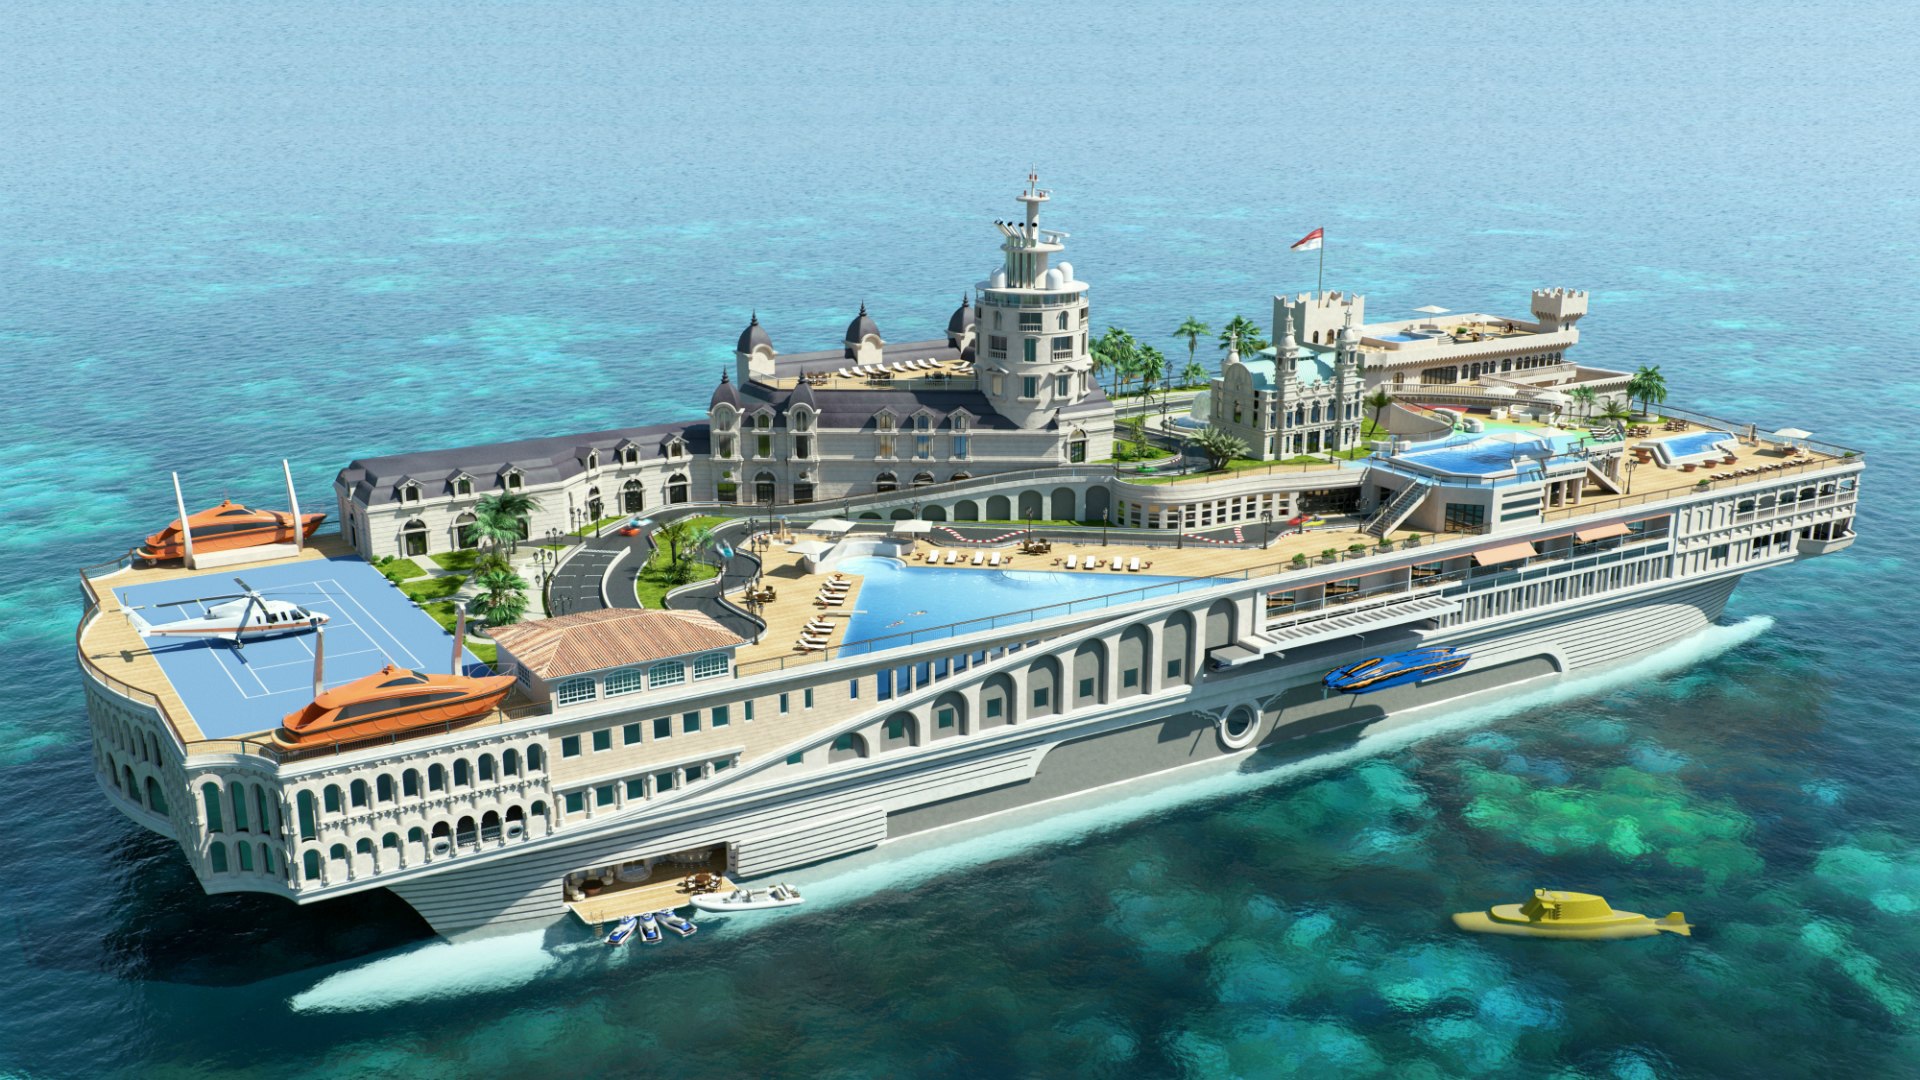 Необыкновенная концепт-яхта Streets of Monaco